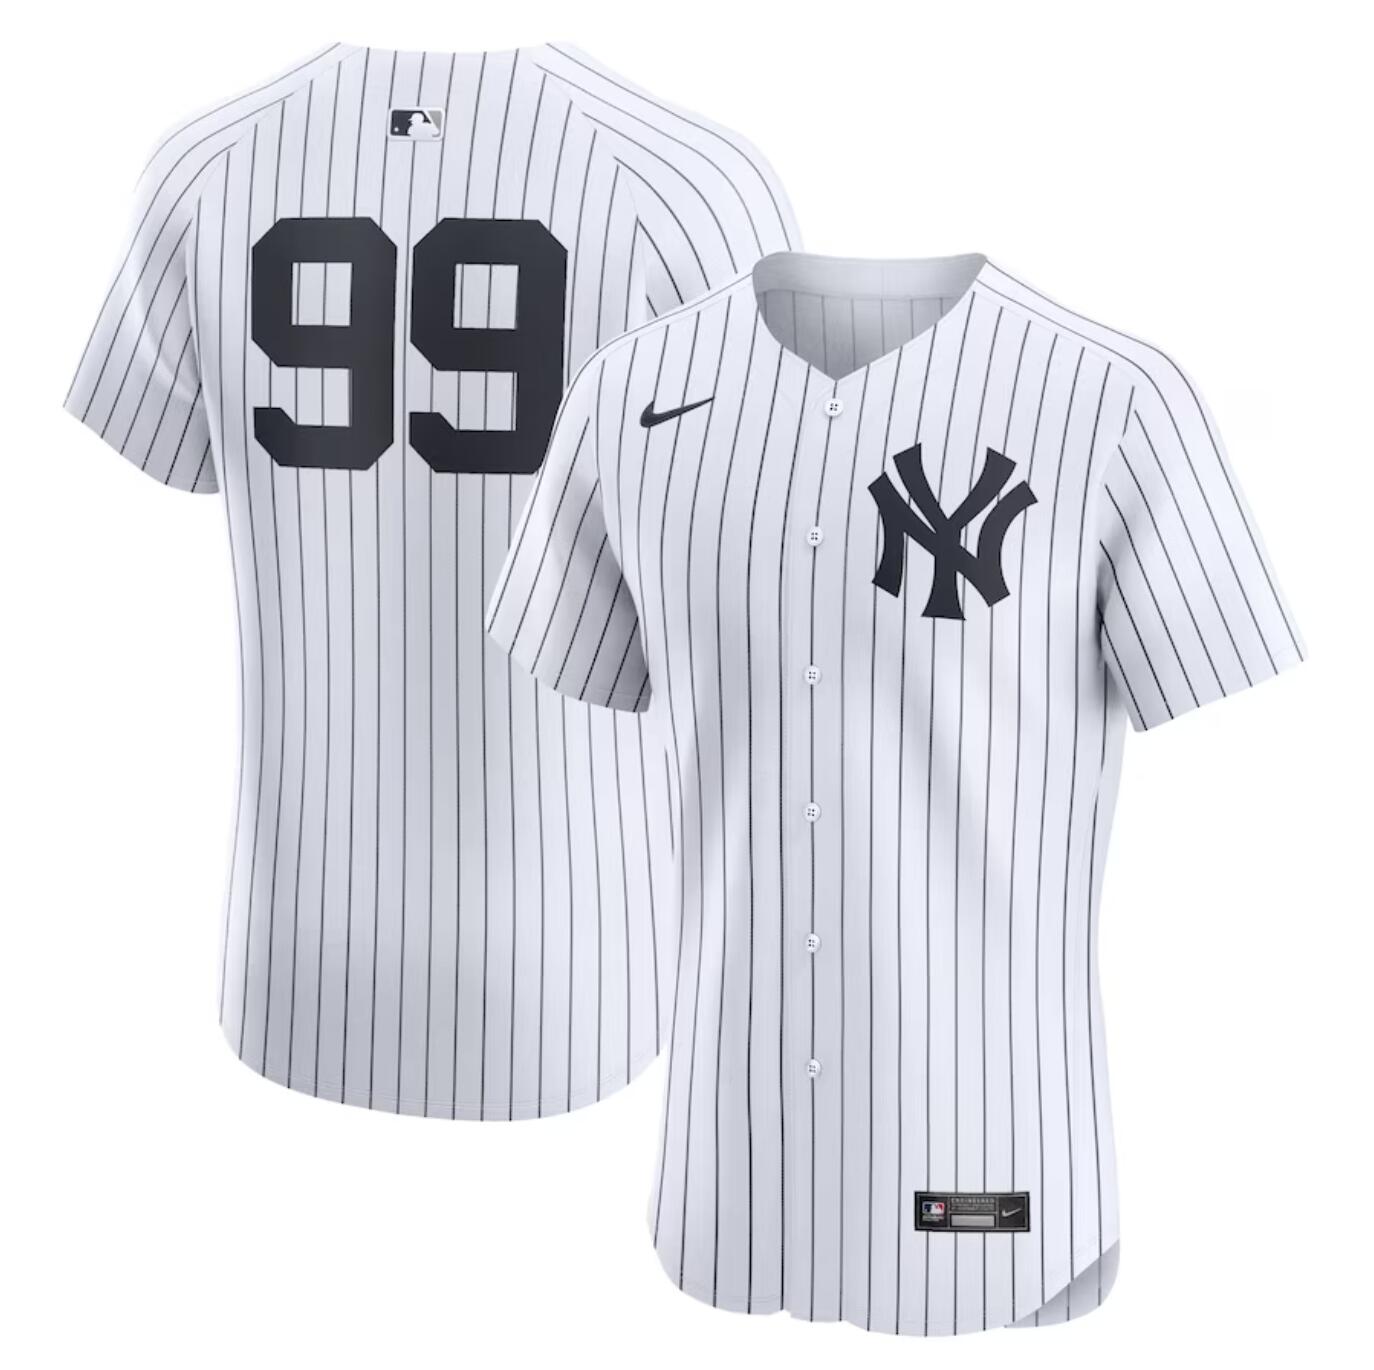 Men's New York Yankees #99 Aaron Judge Baseball Jersey